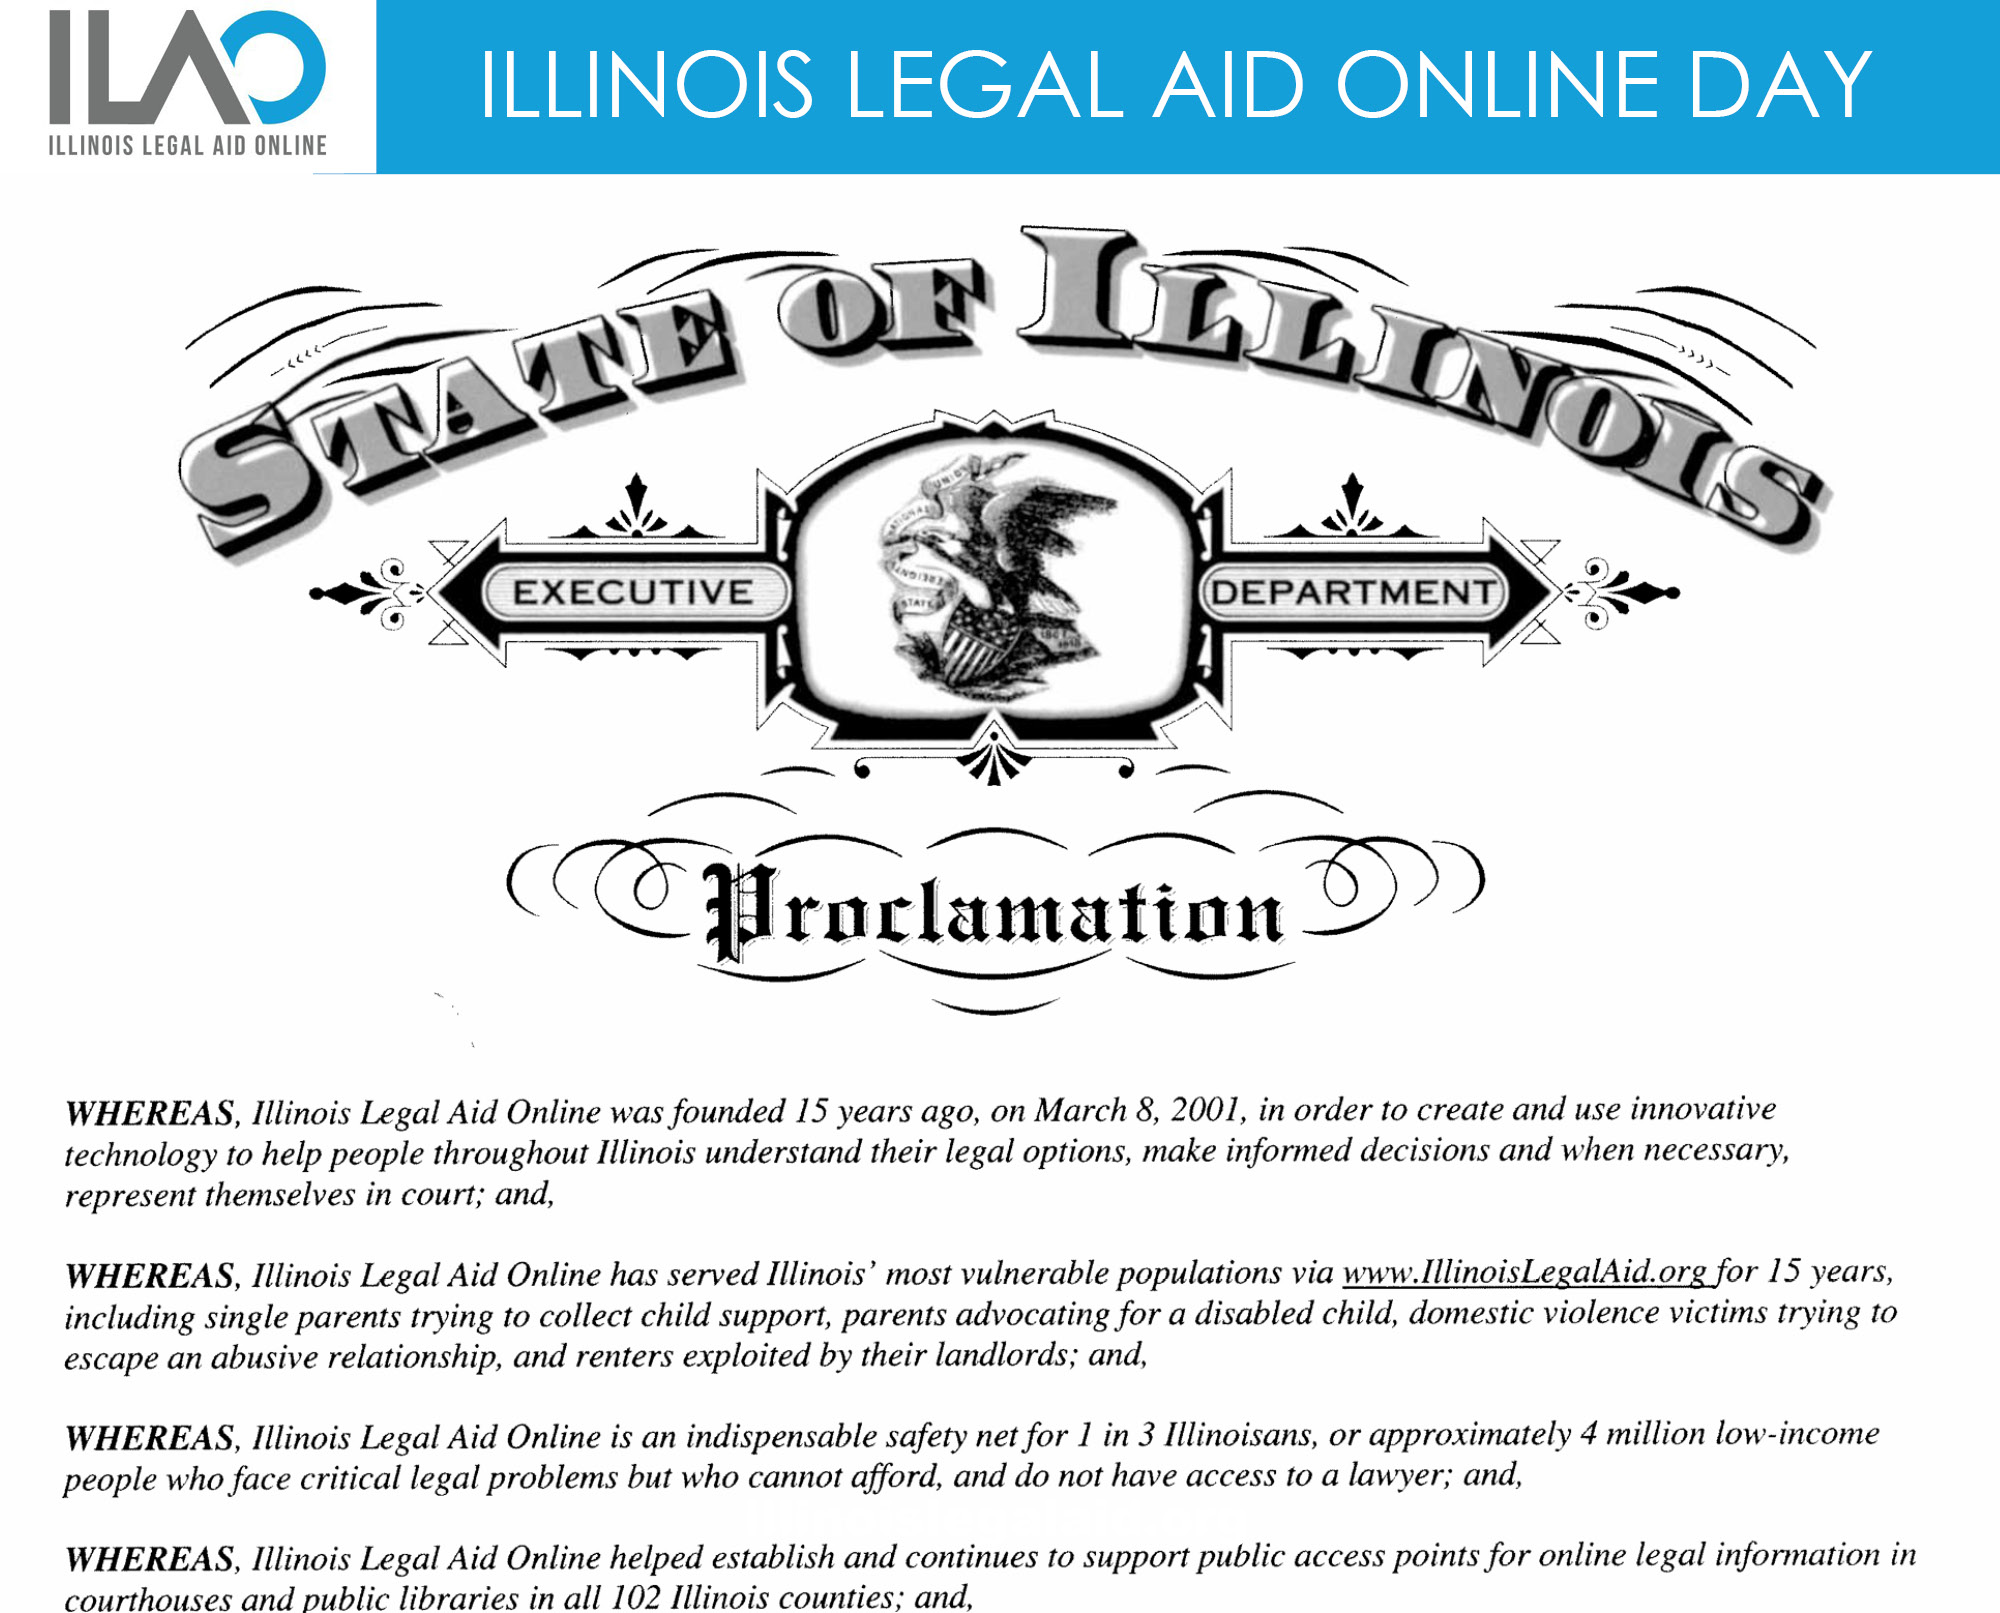 ilao_day-illinois_legal_aid_online.jpg